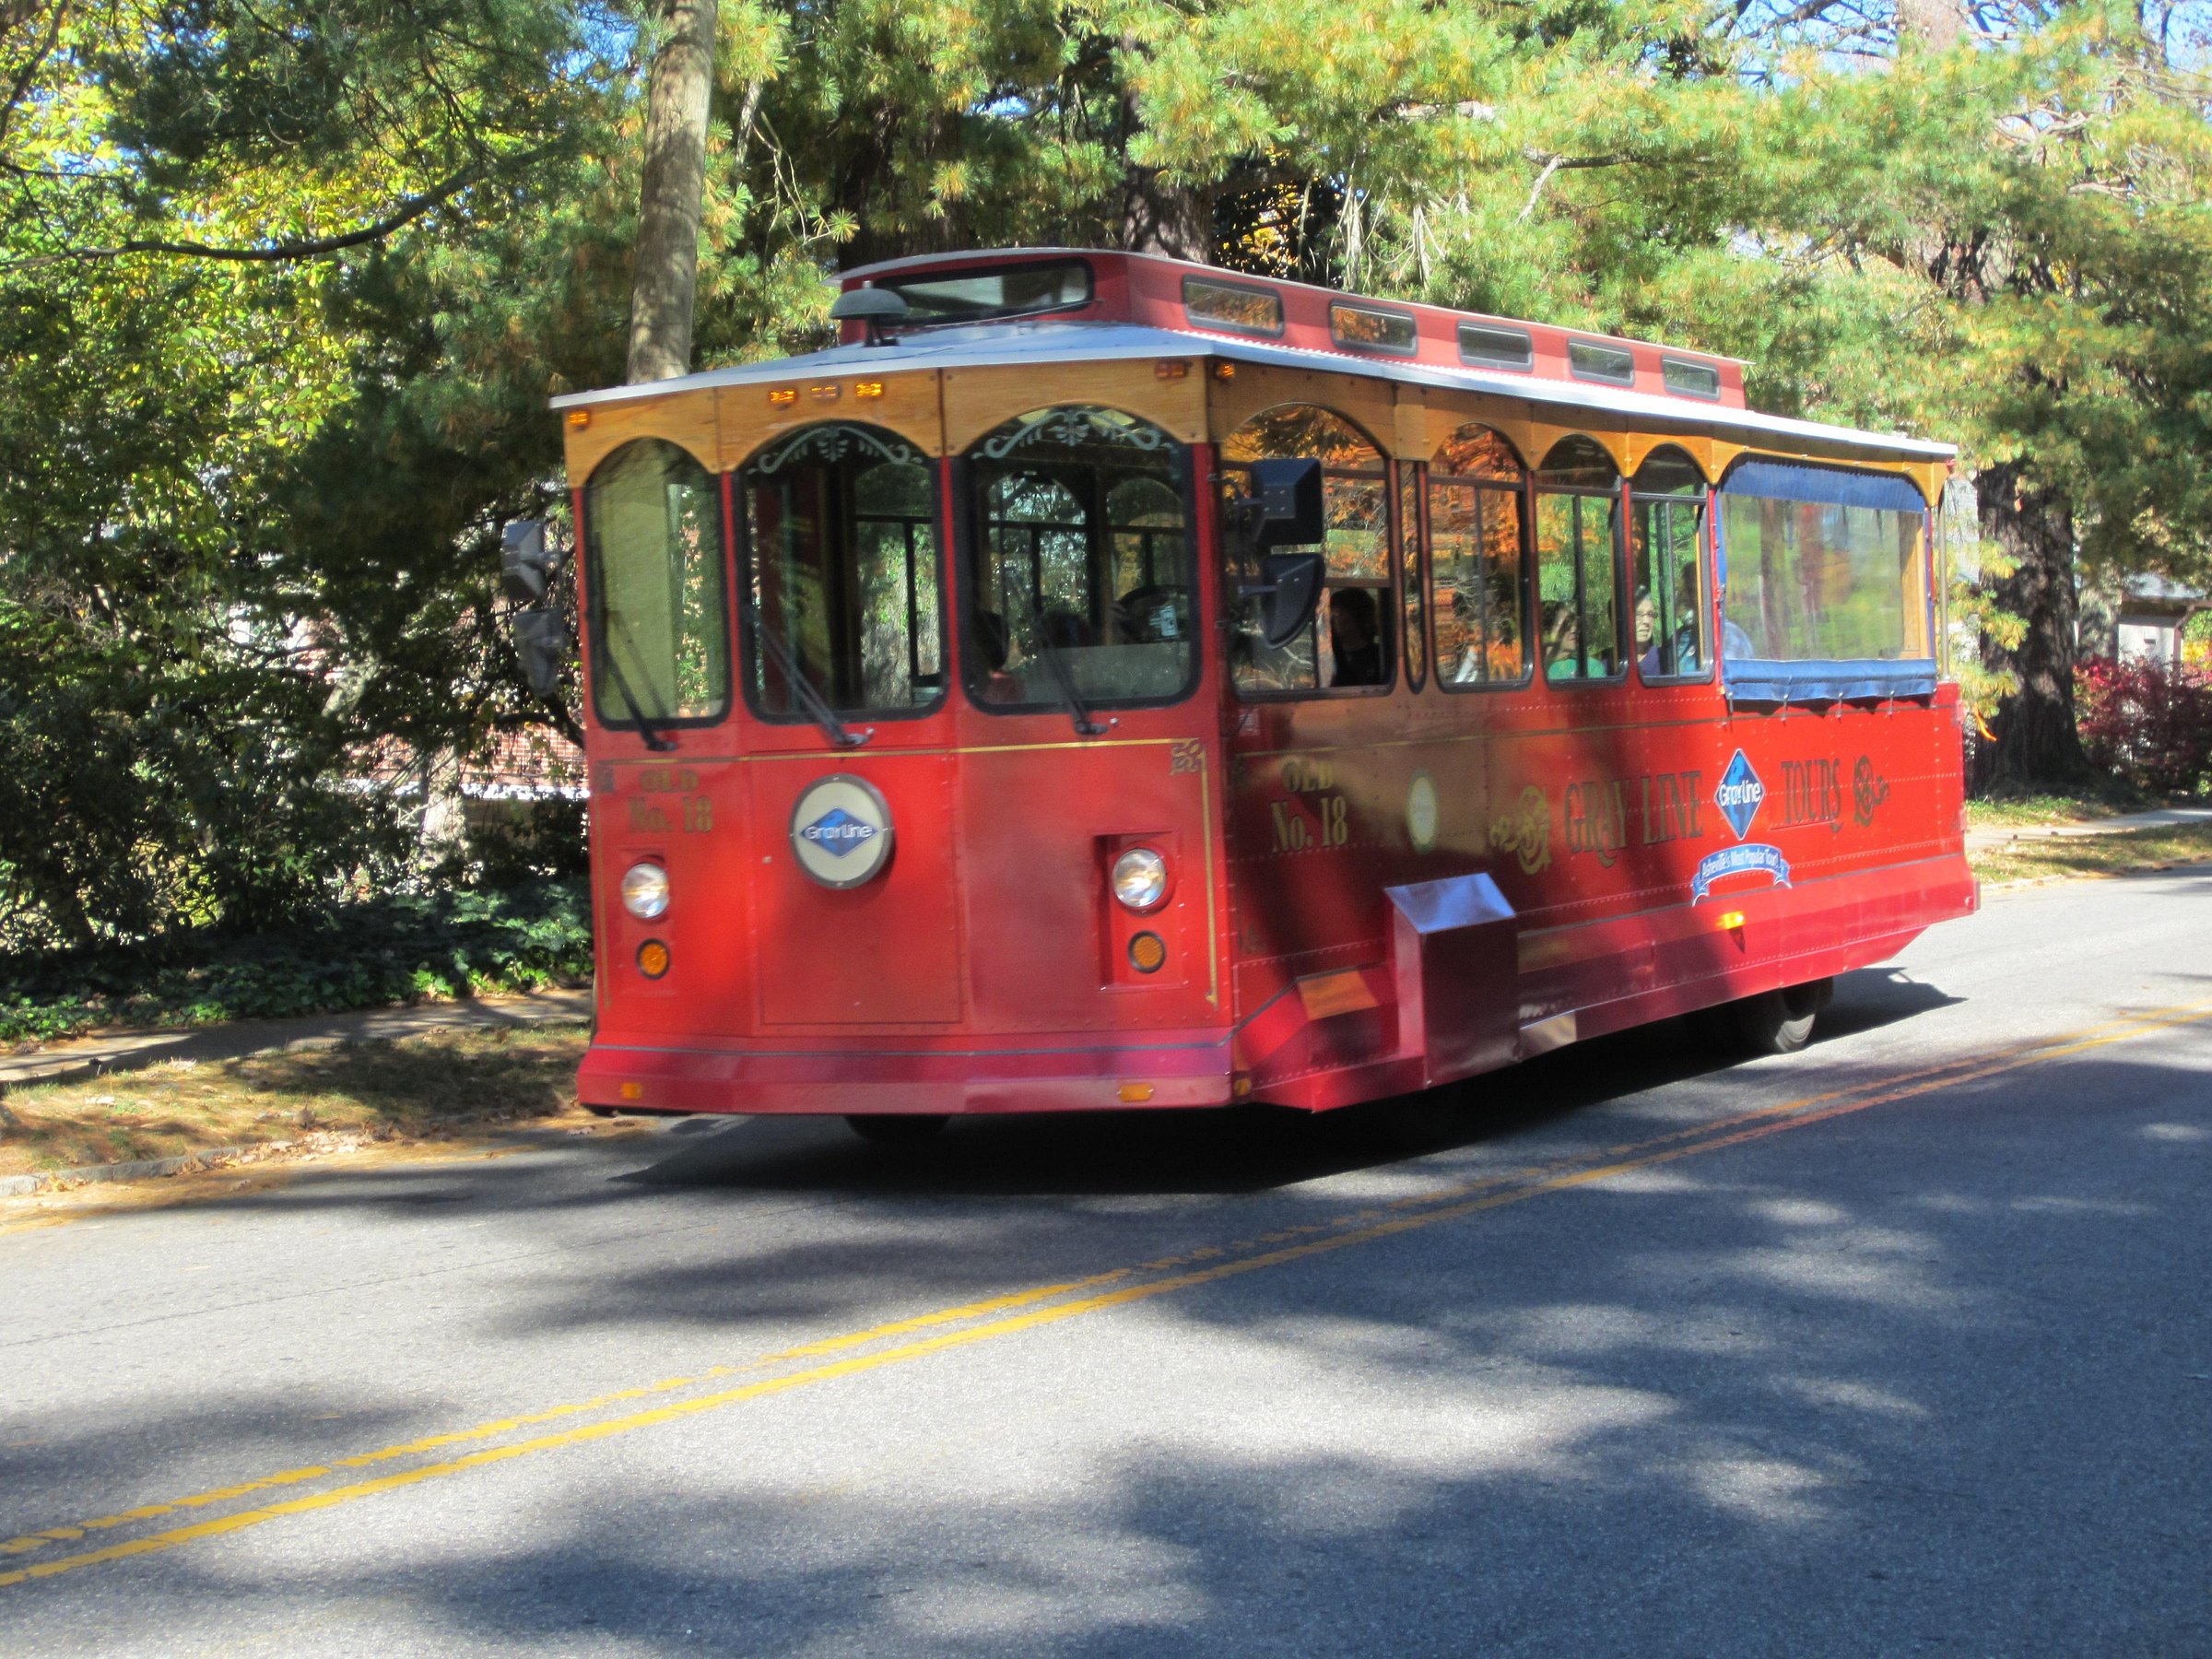 grayline trolley tour asheville